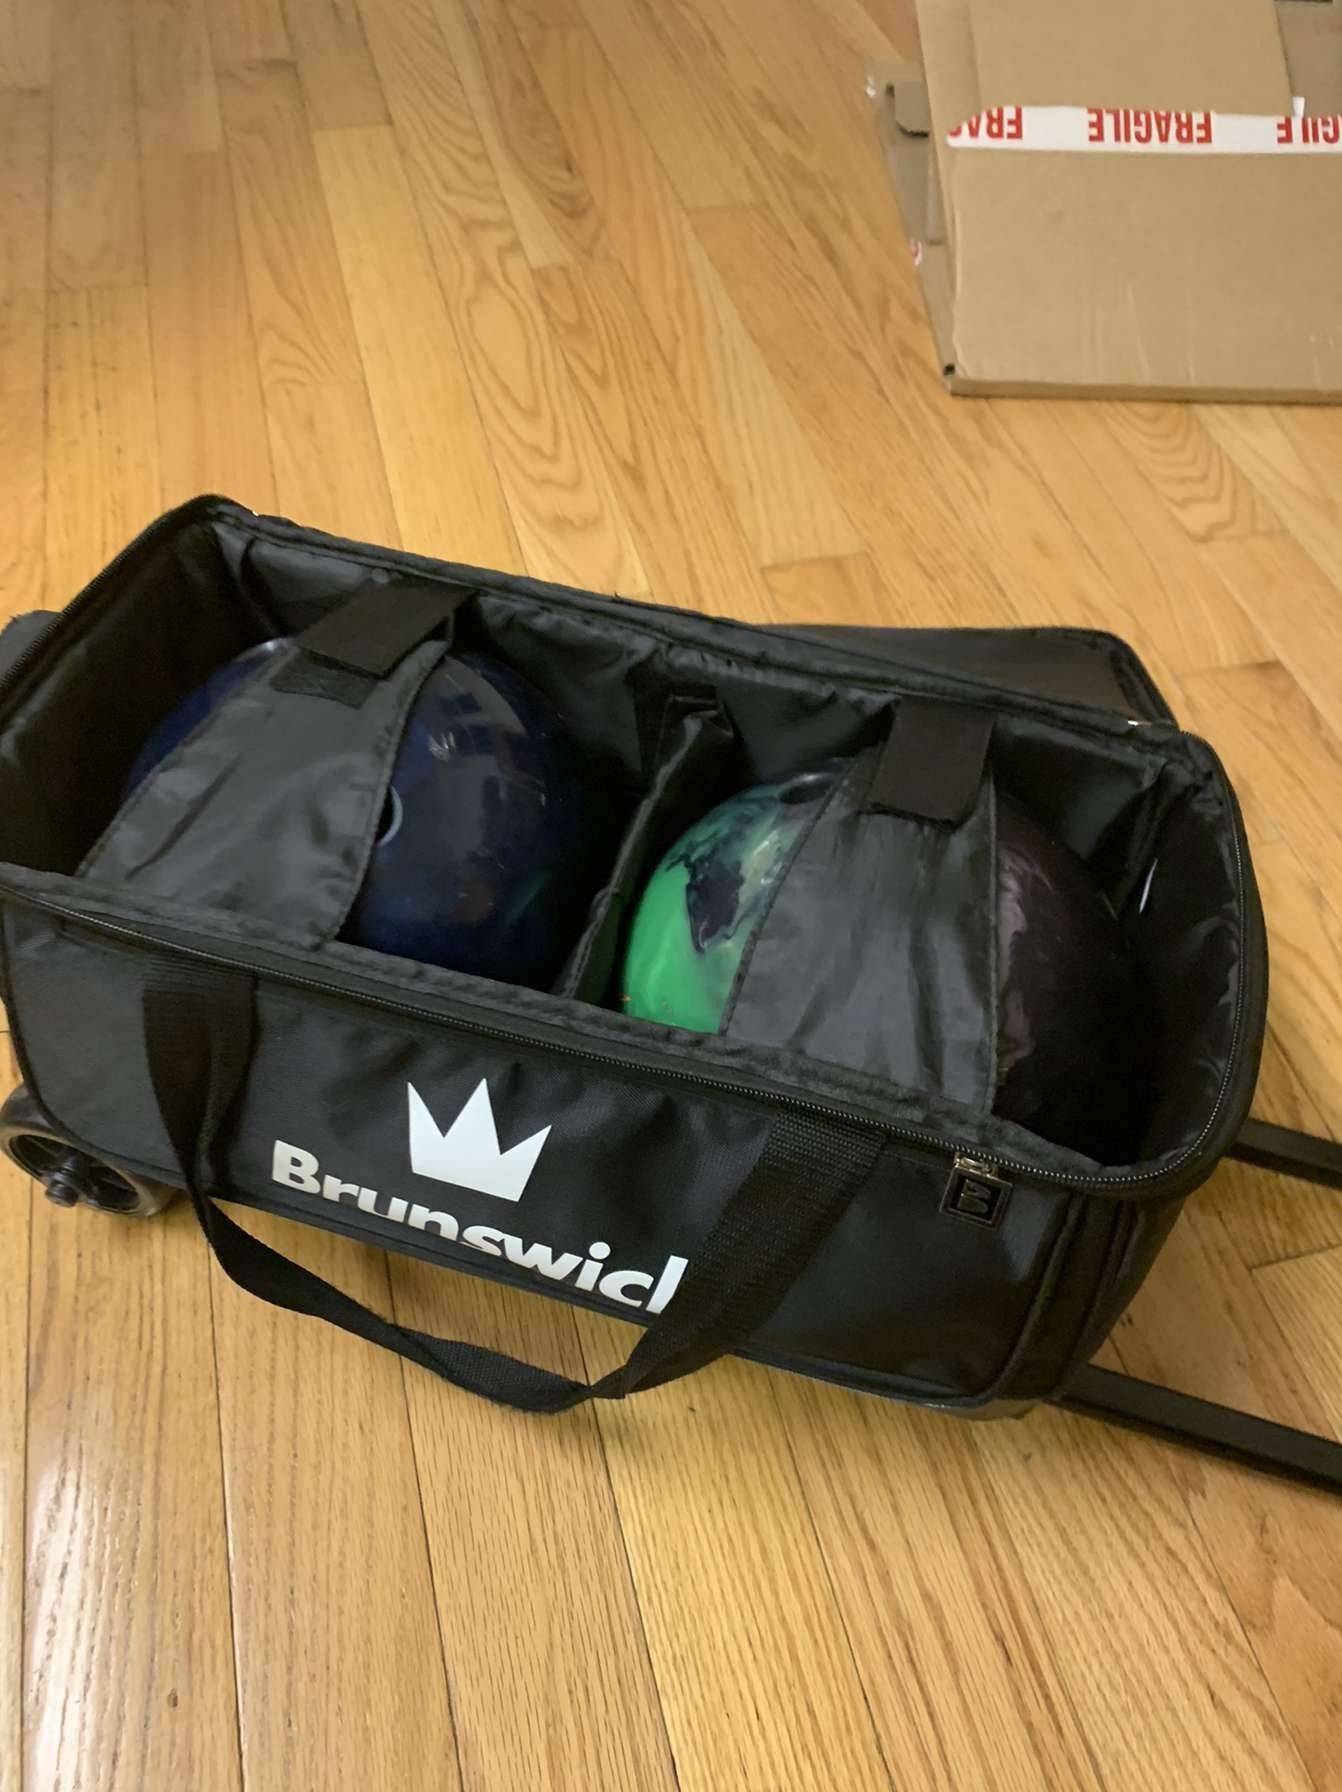 Bowling Ball + Bag set